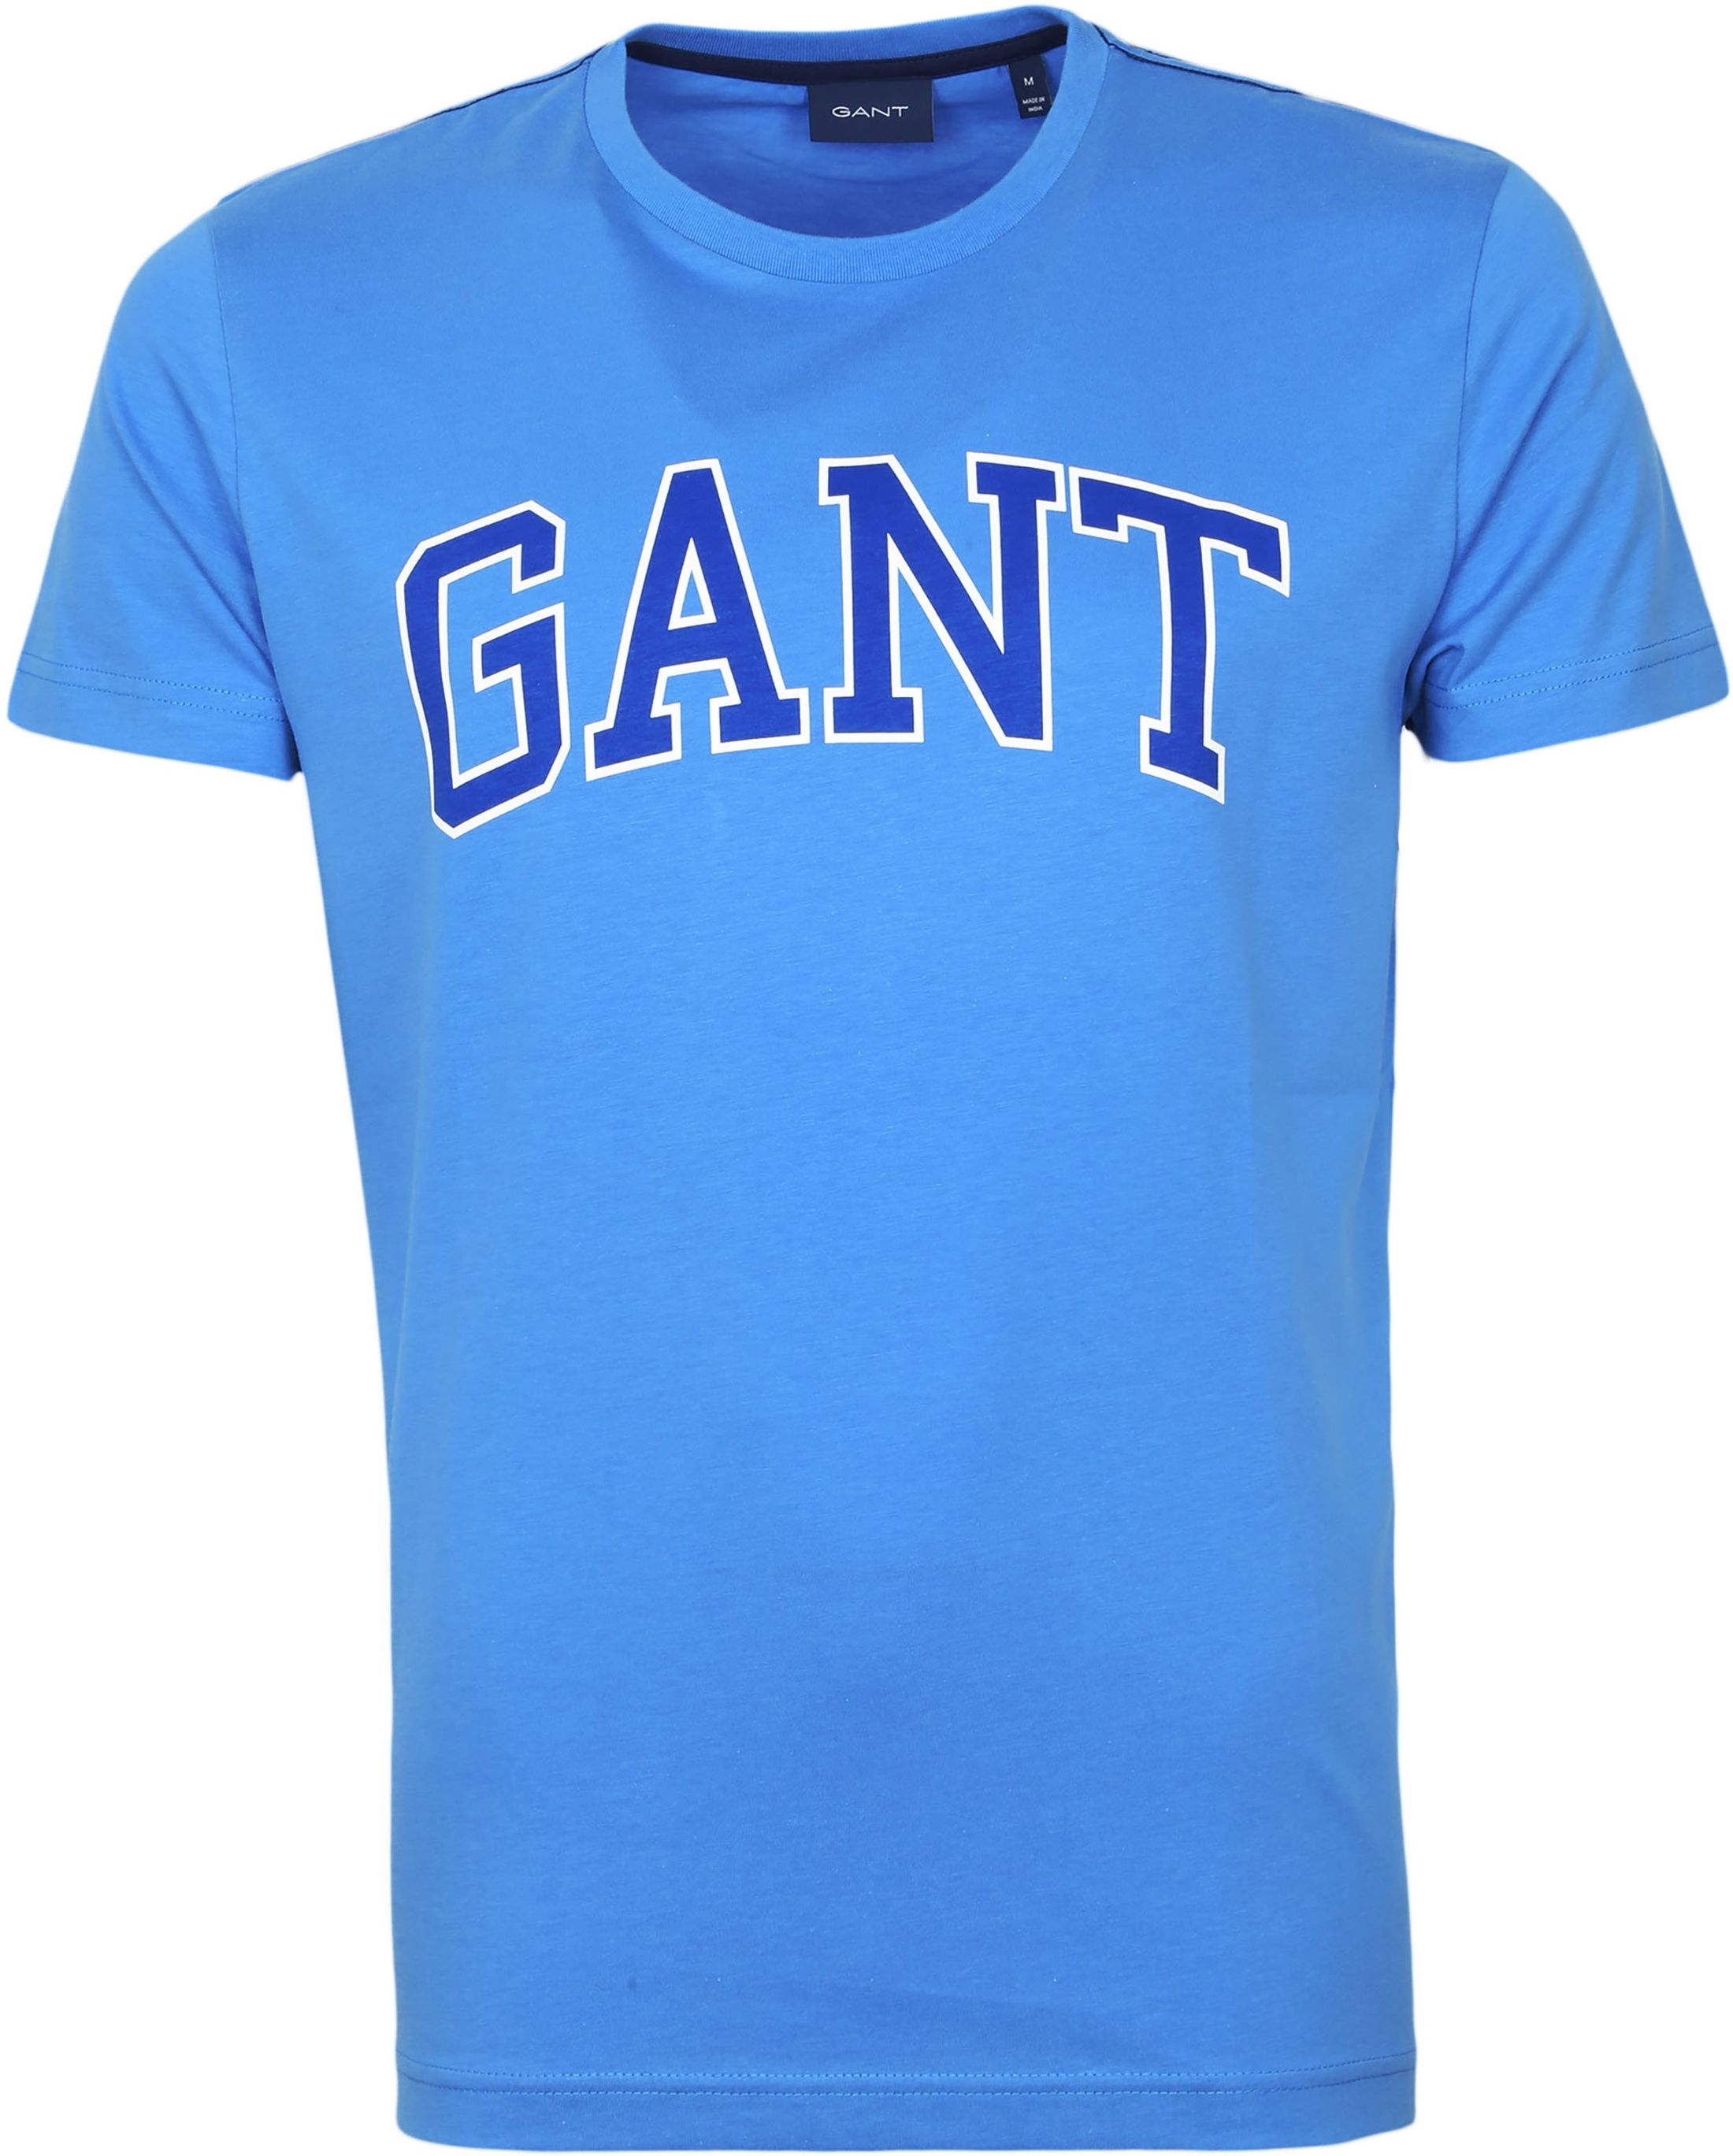 Gant T-shirt Graphic Logo Blue size M